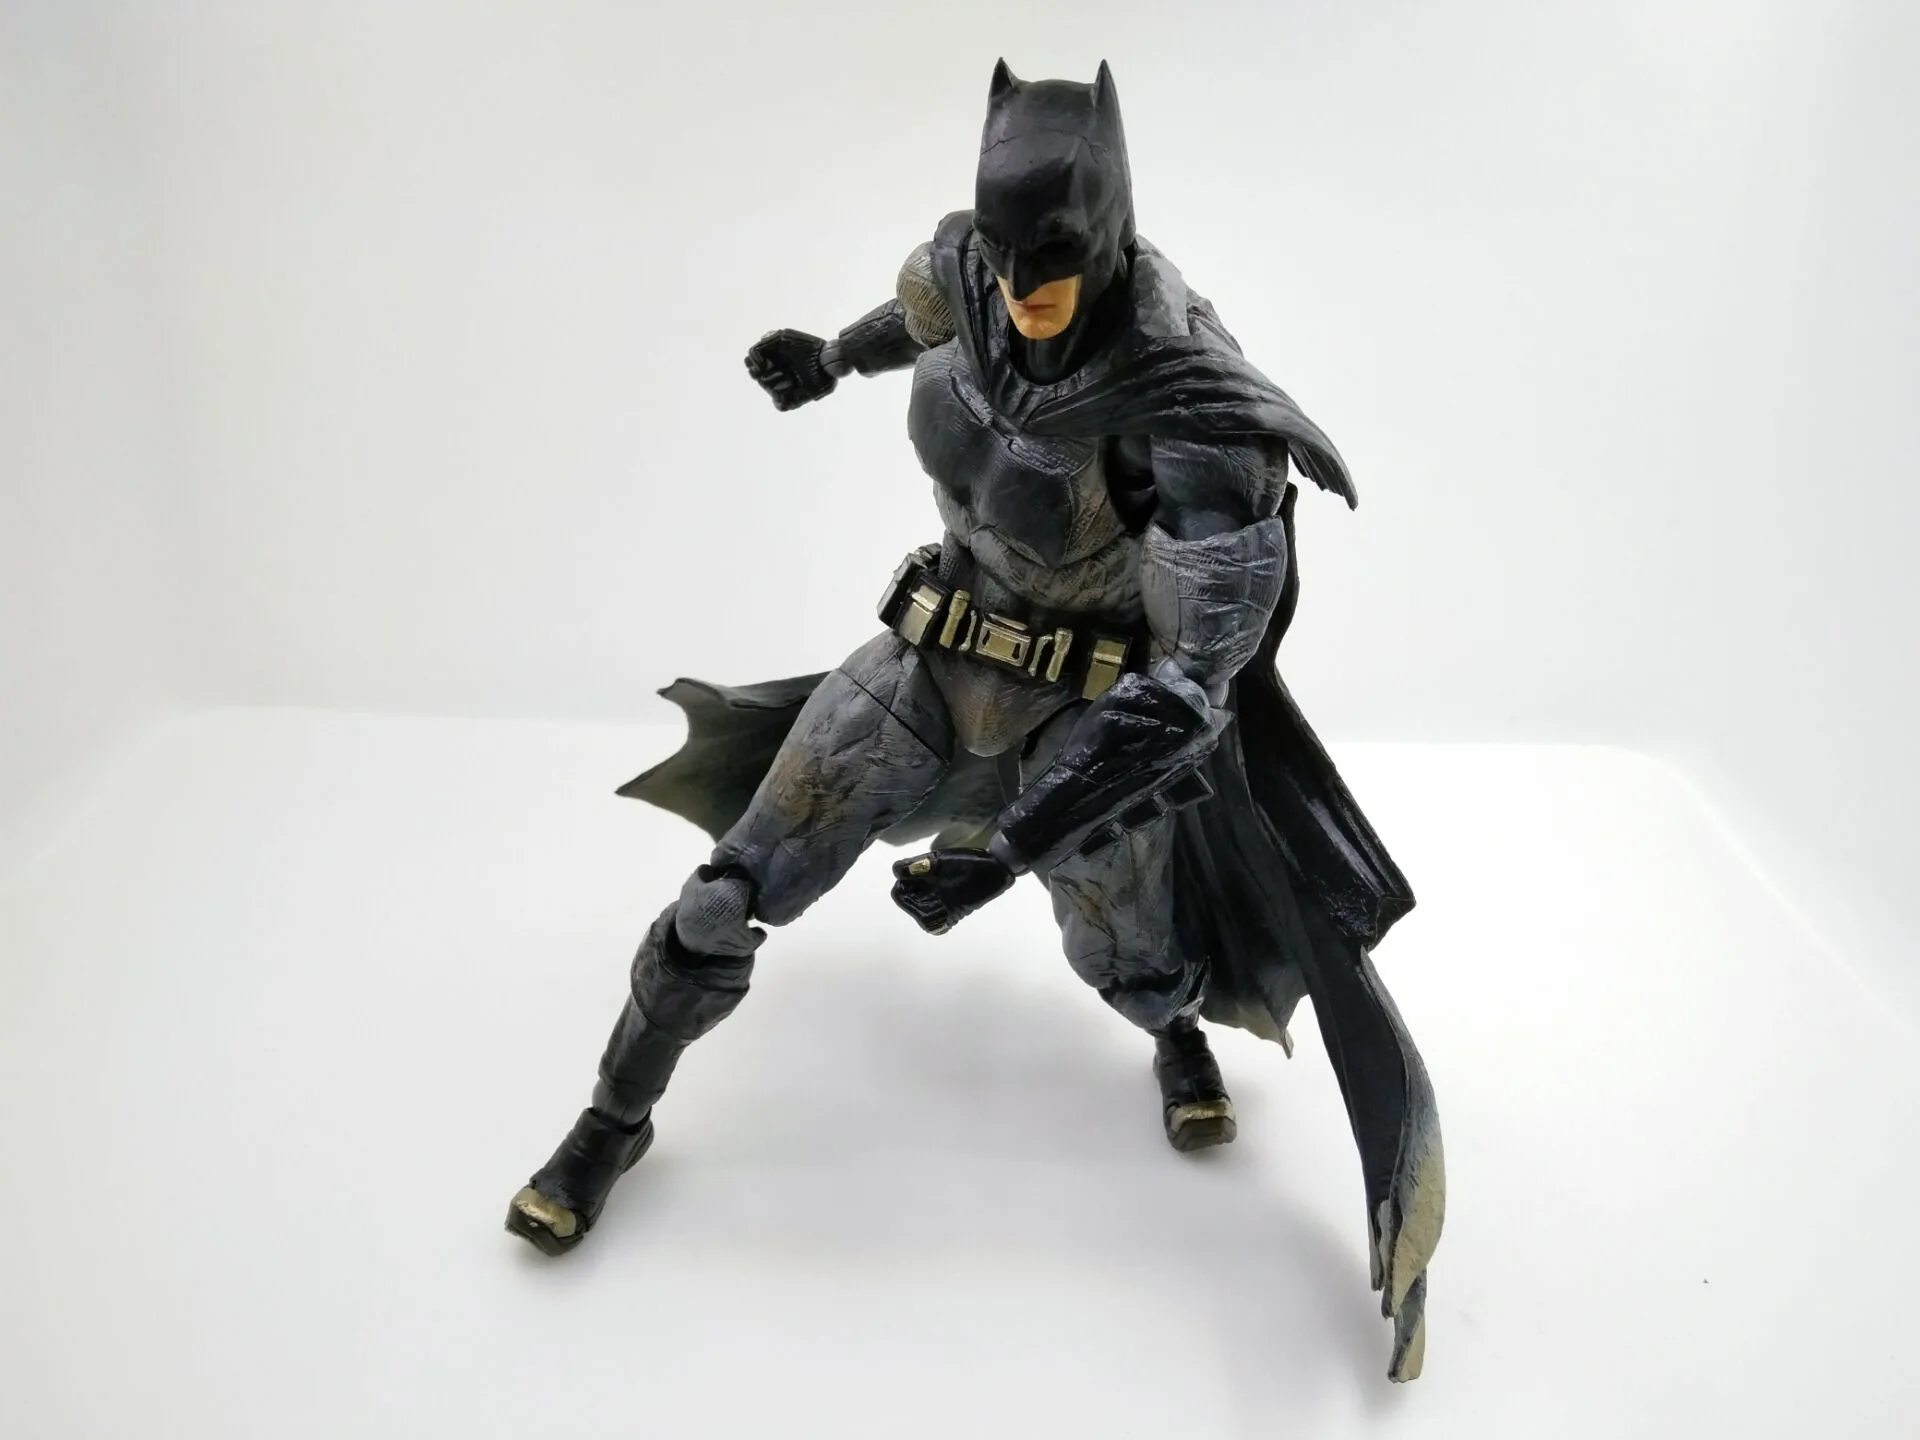 PLAY ARTS Down of Justice 25 см Бэтмен знак в фильме Бэтмен против Супермена фигурка модель игрушки